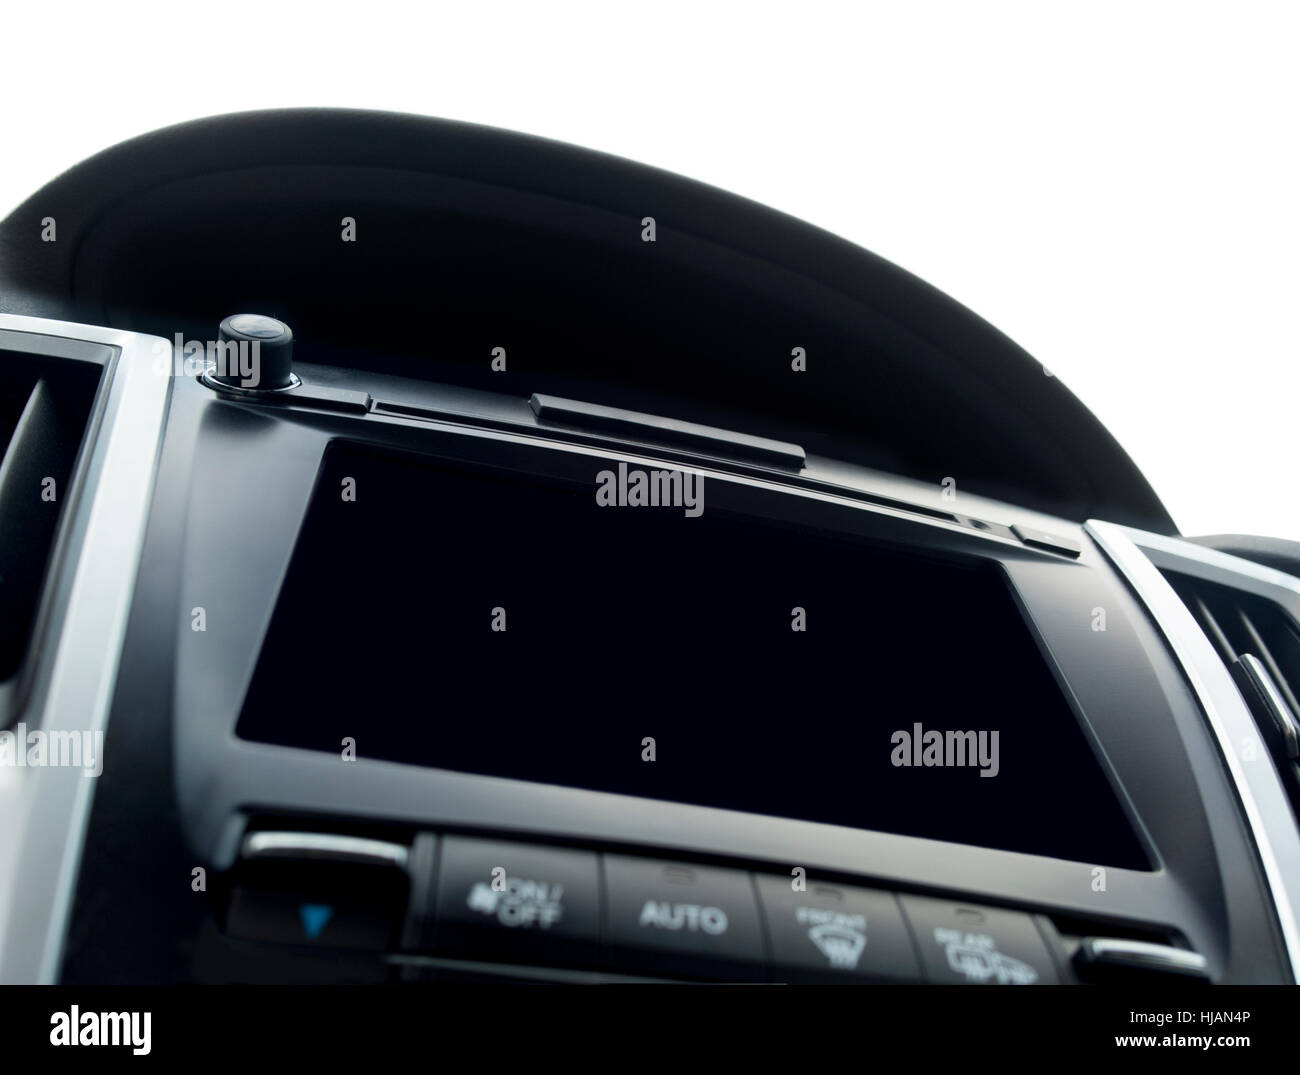 Mini LCD Screen Digital Clock Self-Adhesive Interior Car Auto Desk  Dashboard X1